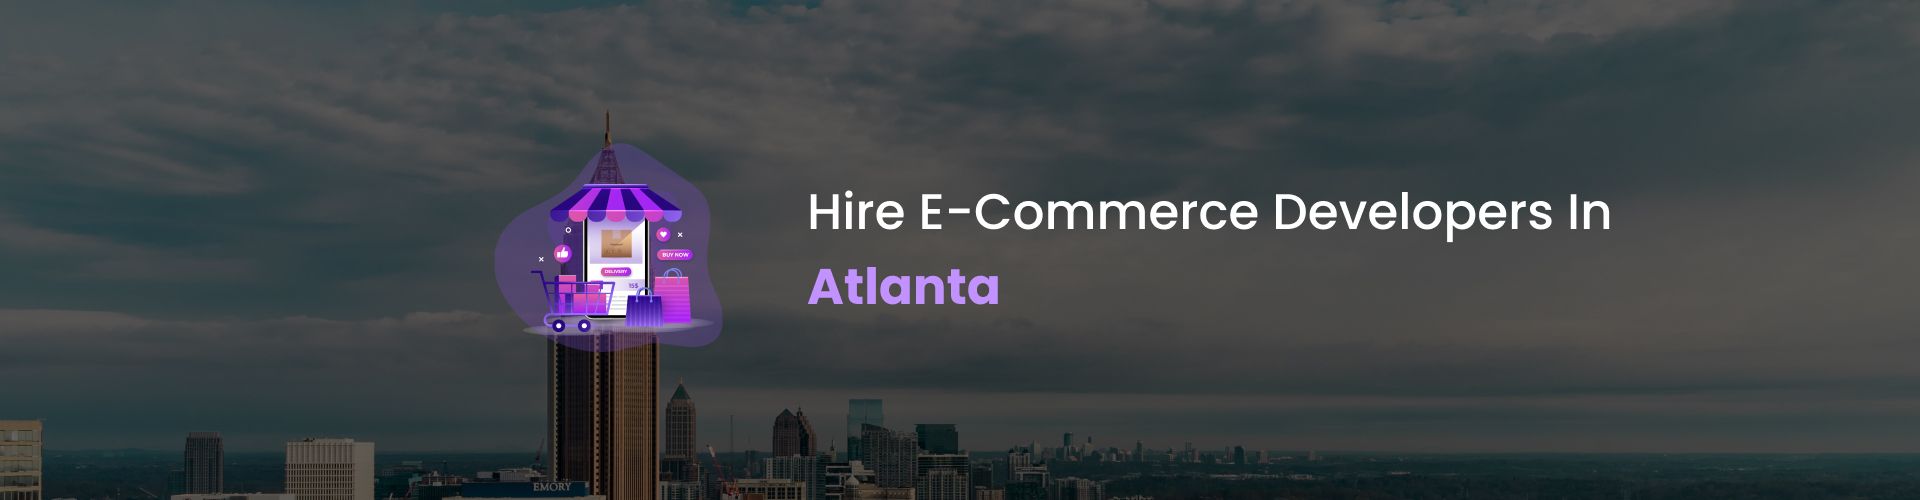 hire ecommerce developers in atlanta